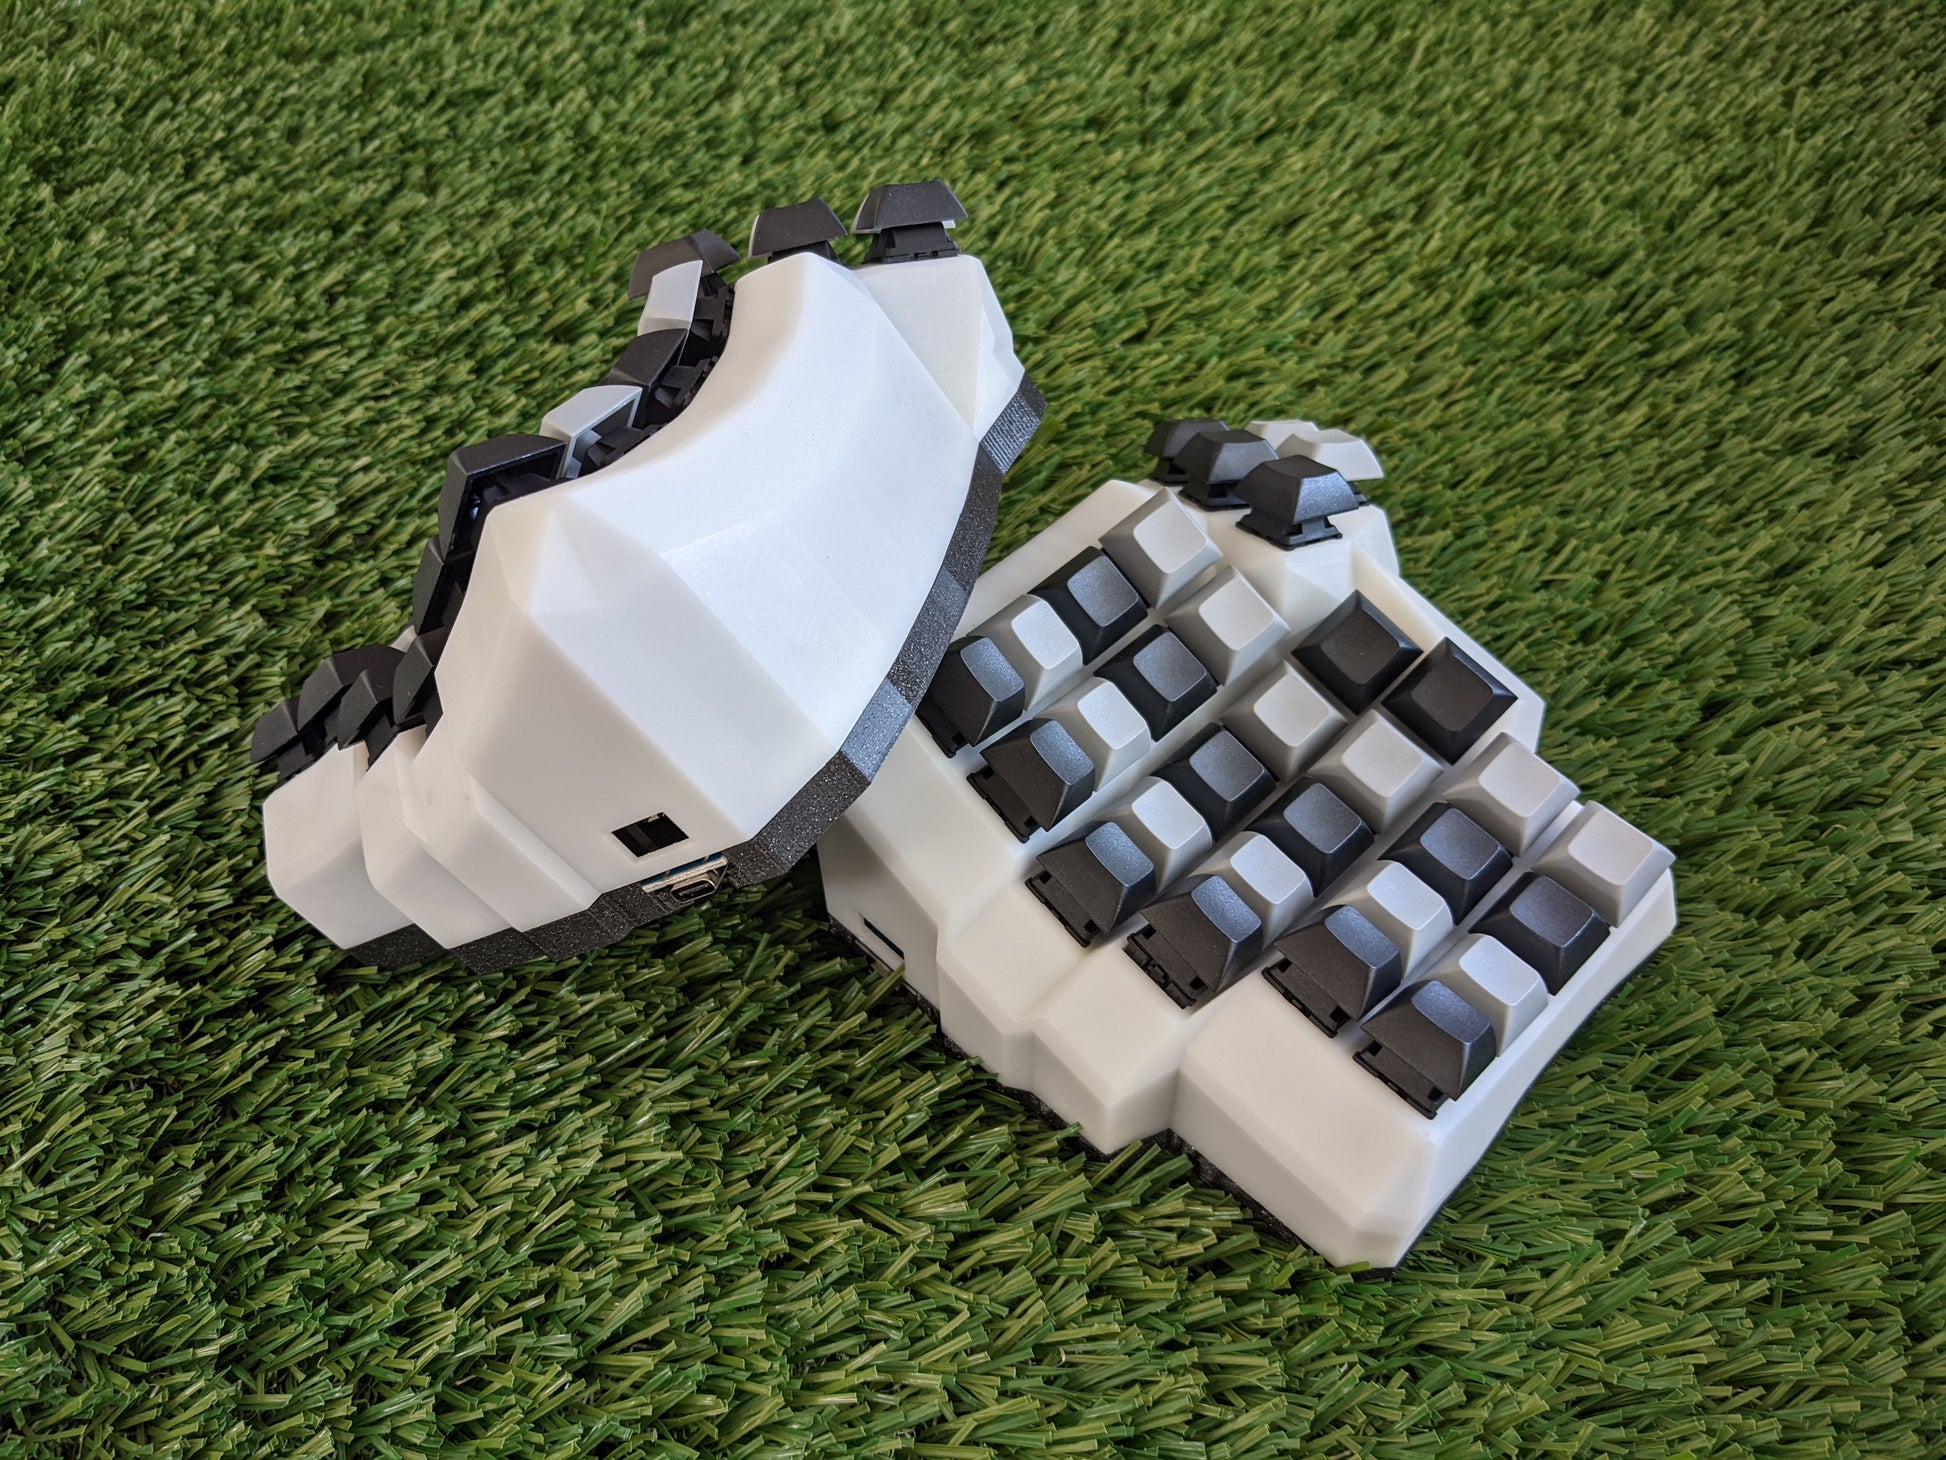 taikohub ergonomic dactyl manuform keyboard in white resin in size medium side view